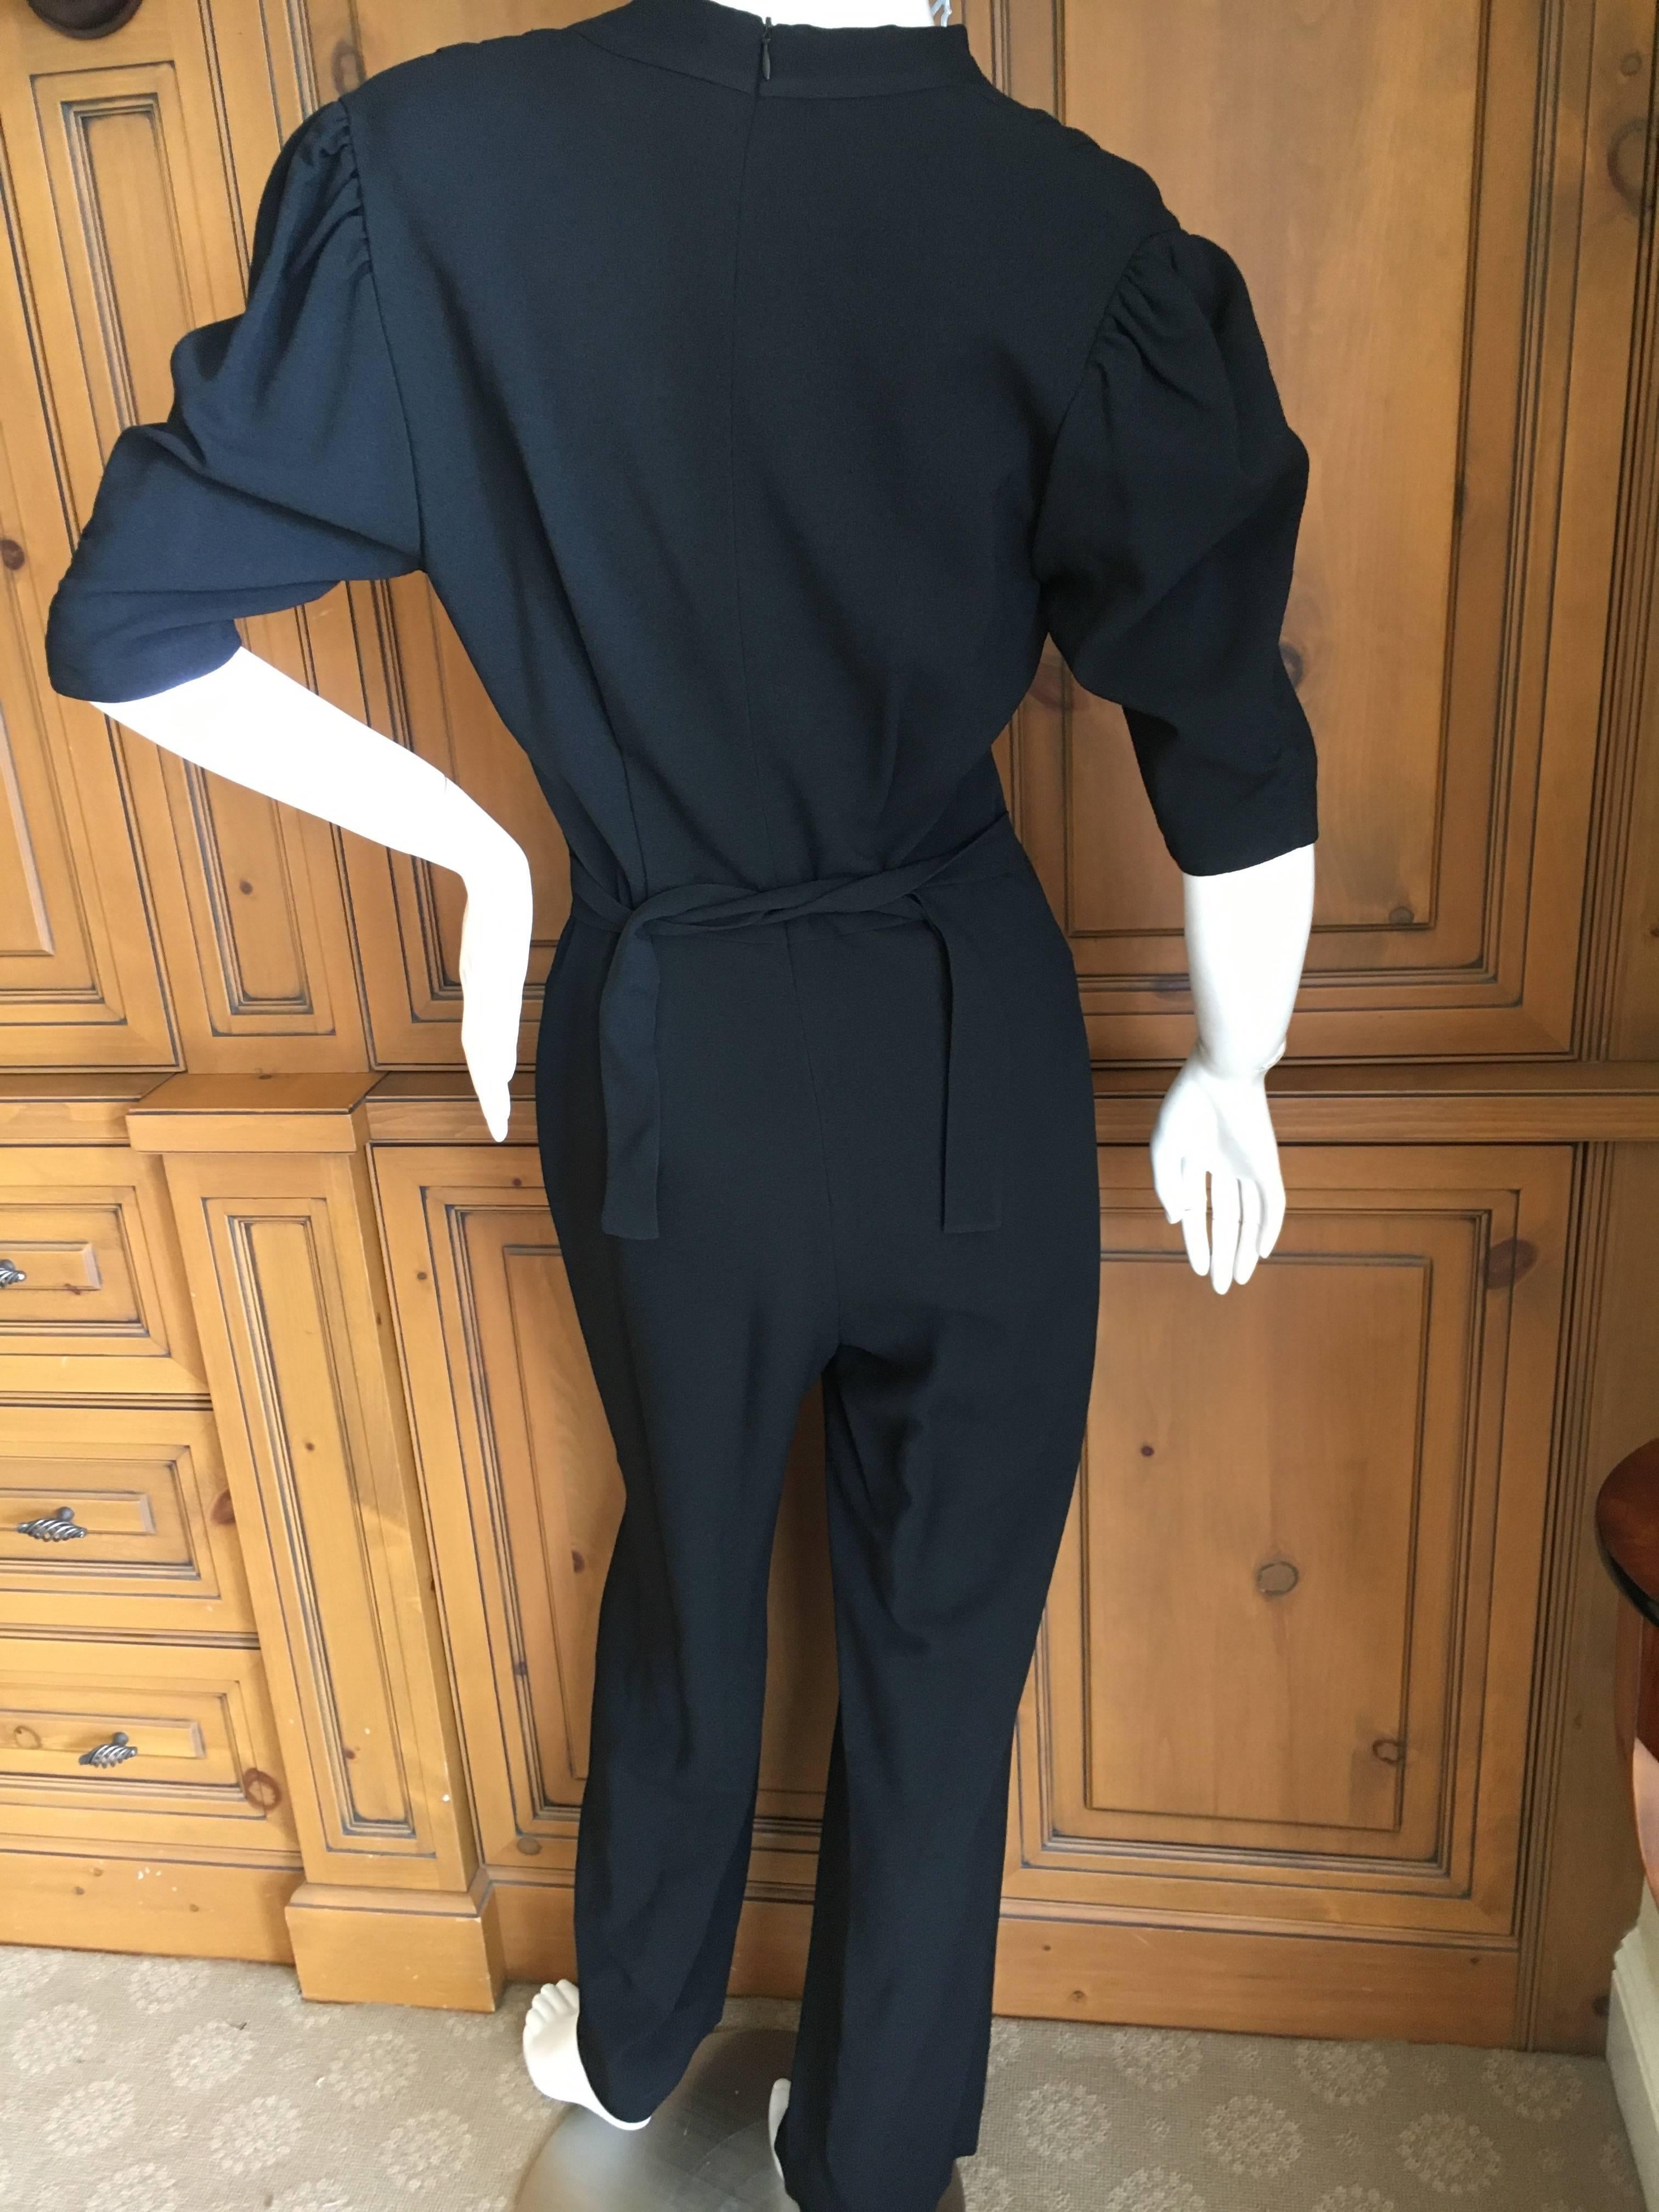 Norma Kamali Vintage Black Crepe 1930's Style Jumpsuit For Sale 2